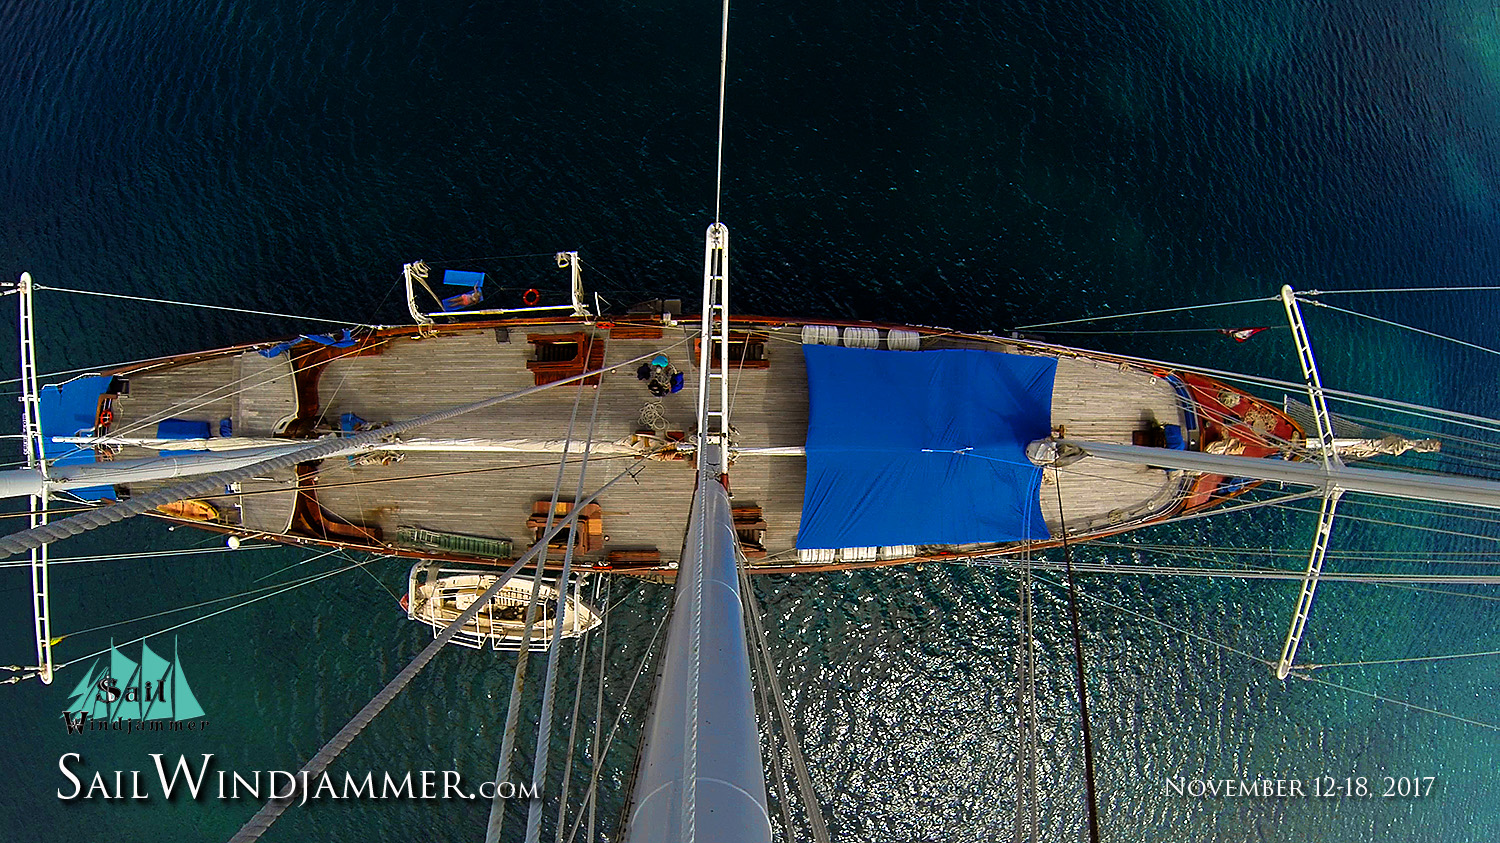 Adventure Travel Cruise with Models on Sail Windjammer to St. Maarten -> Antiqua